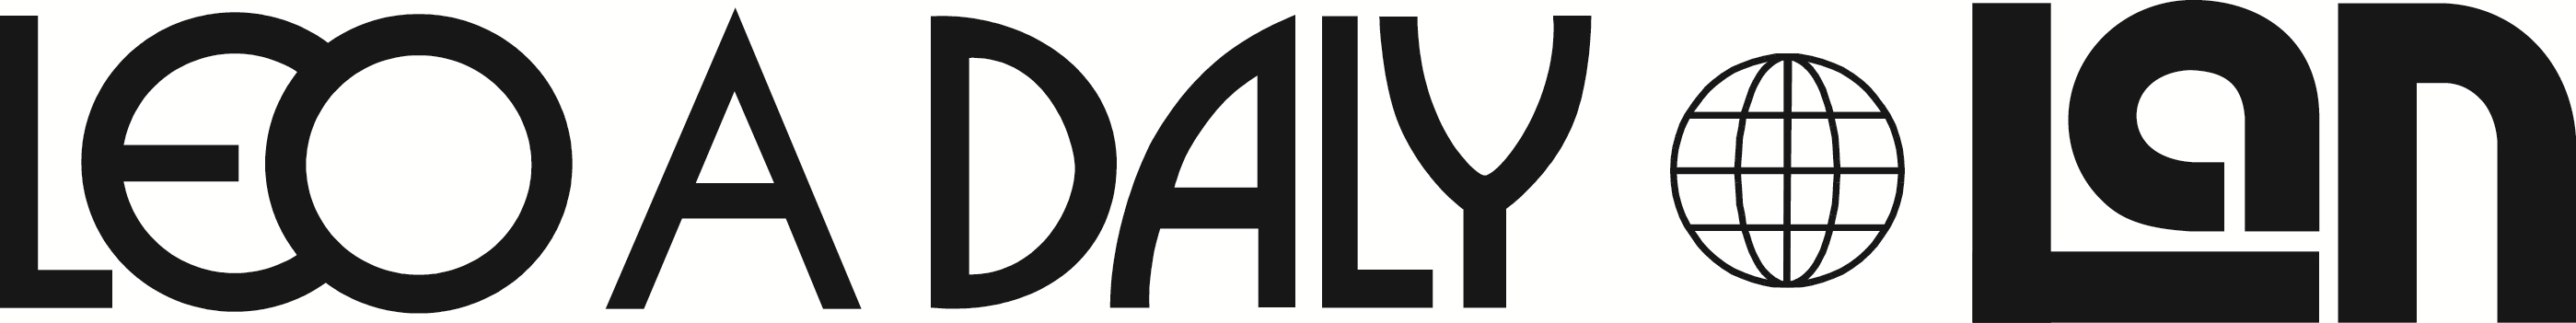 LEO A DALY/Lockwood Andrews & Newnam (LAN) Company Logo